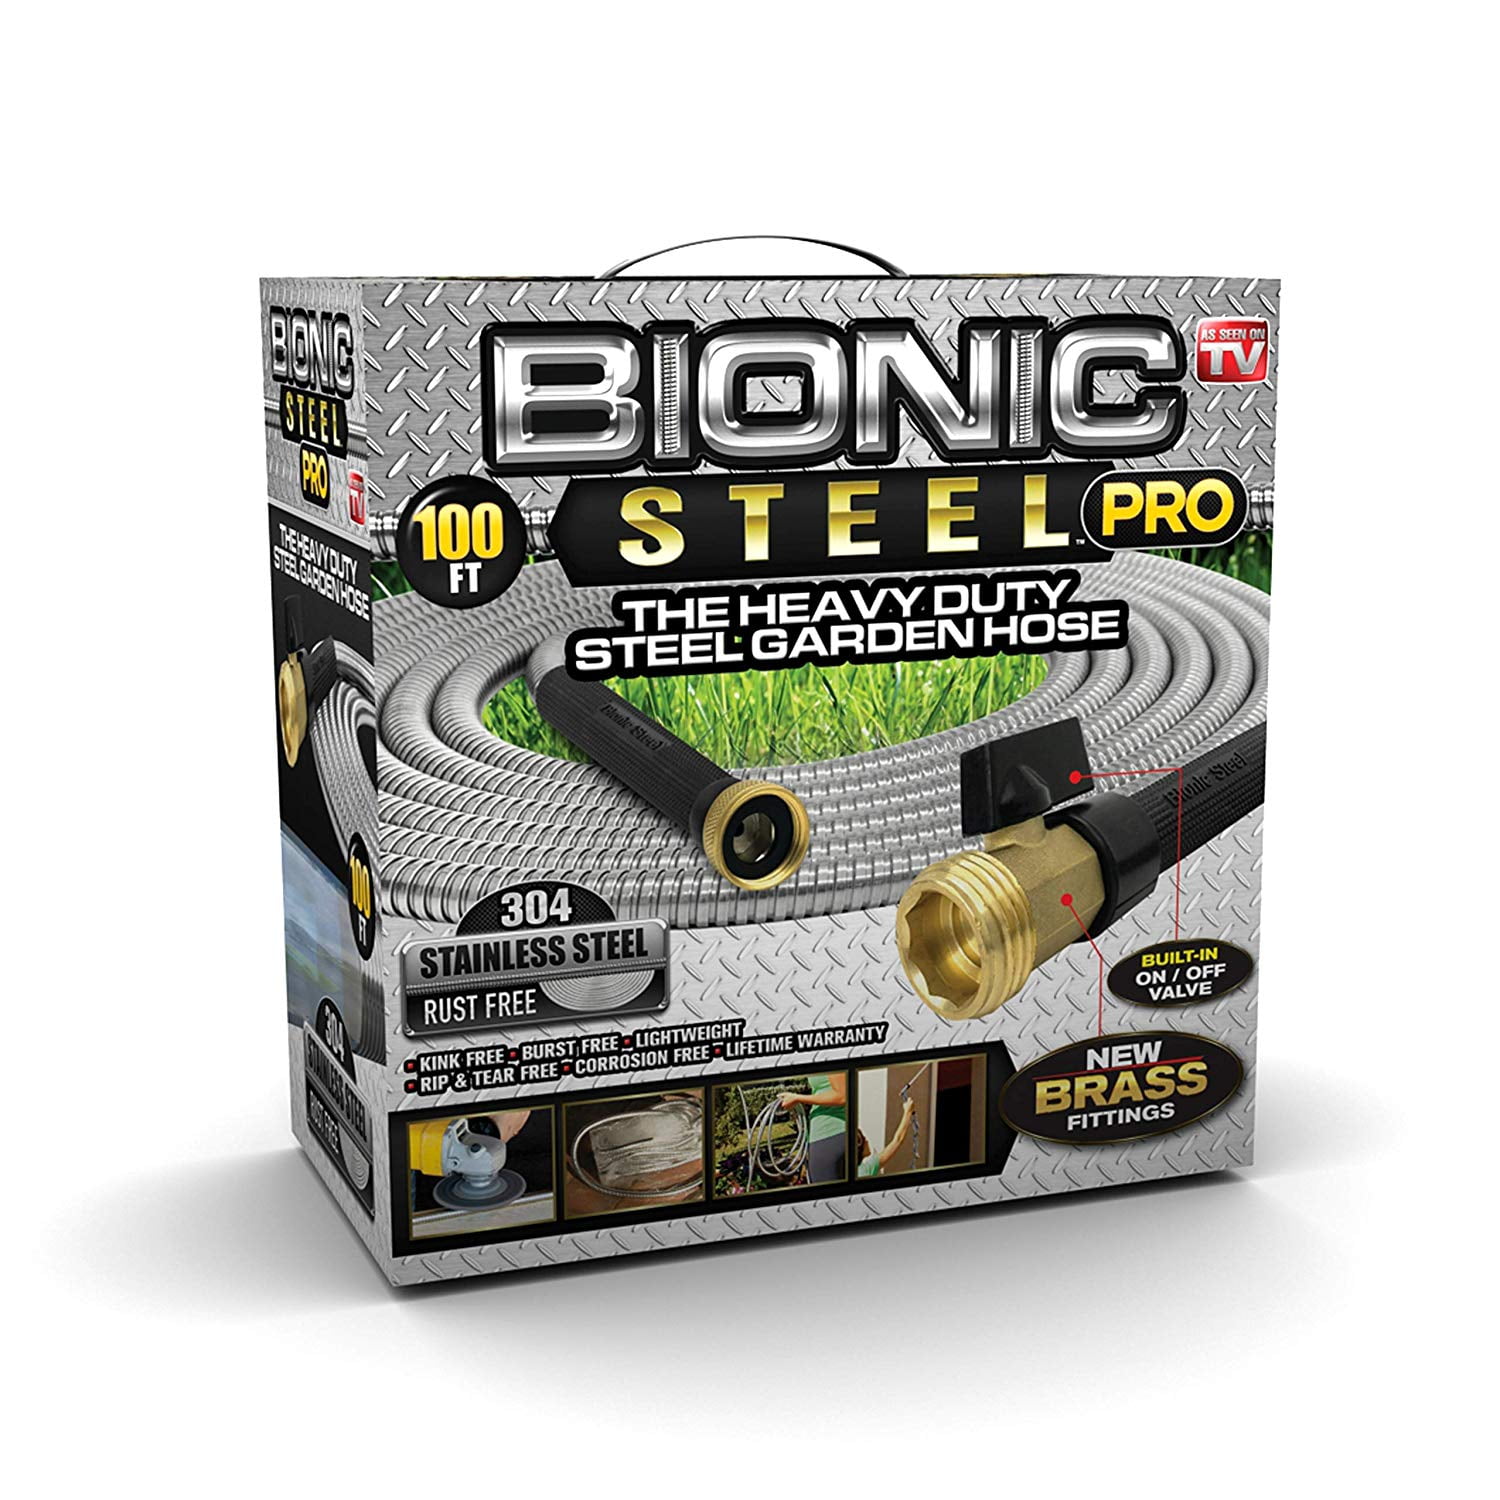 Bionic Steel PRO Garden Hose - 304 Stainless Steel Metal 100 Foot Bionic Steel Pro Heavy Duty Stainless Steel Garden Hose